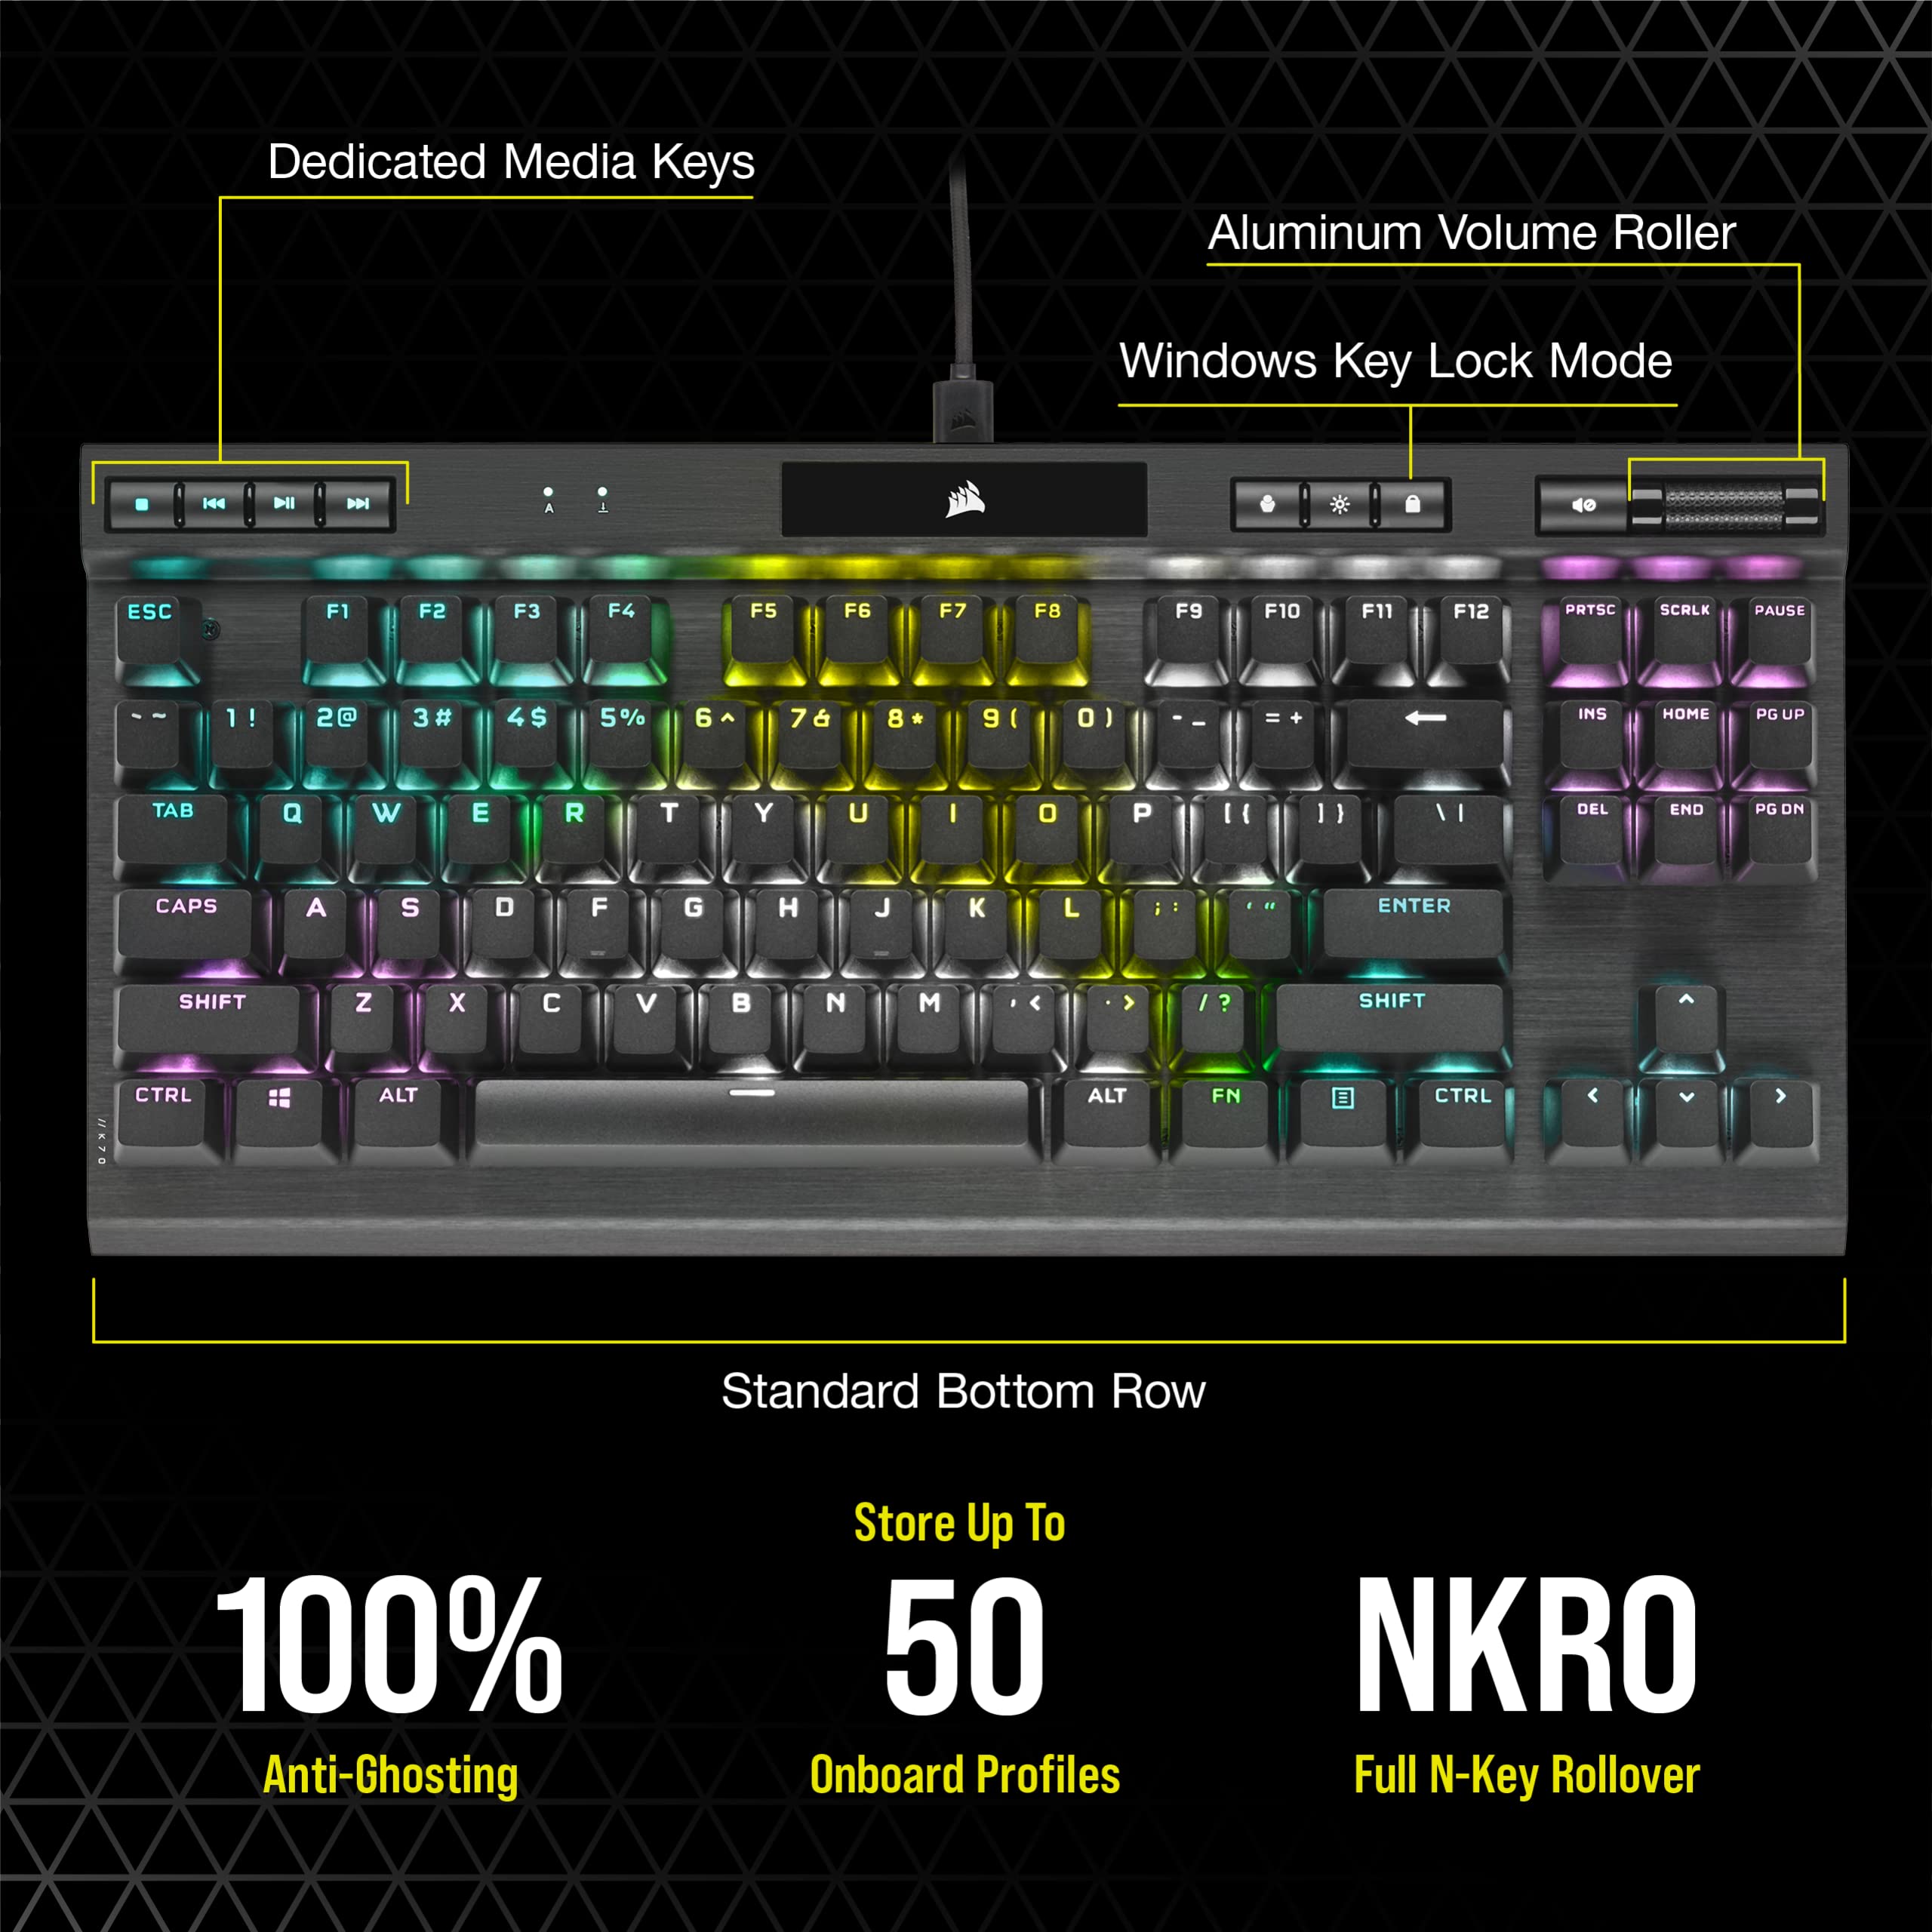 Corsair K70 RGB TKL CHAMPION SERIES Tenkeyless Mechanical Gaming Keyboard (CHERRY MX Silent Keyswitches: Linear and Quiet , PBT Double-Shot Keycaps, Per-Key RGB LED Backlighting) QWERTY NA, Black